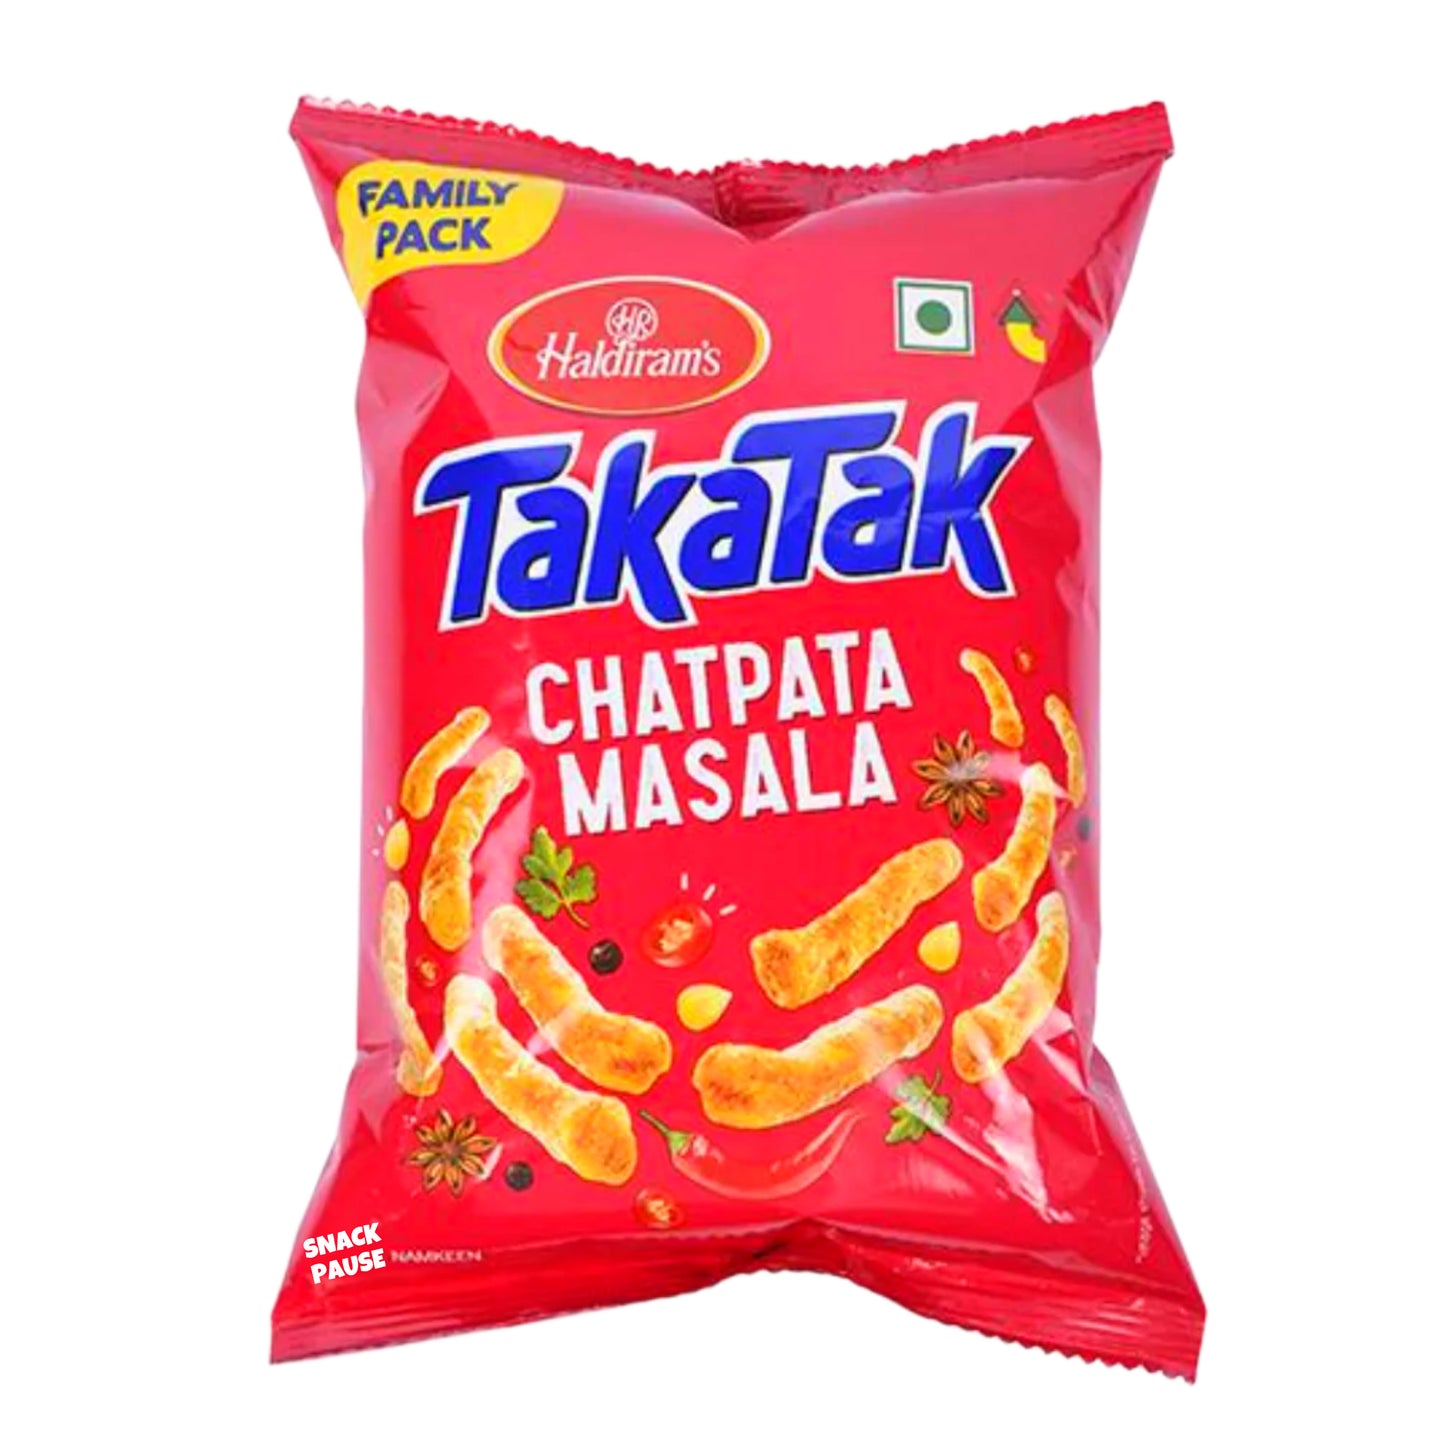 Taka-Tak (20 Rs BIG PACK) I Imported Indian Puffs